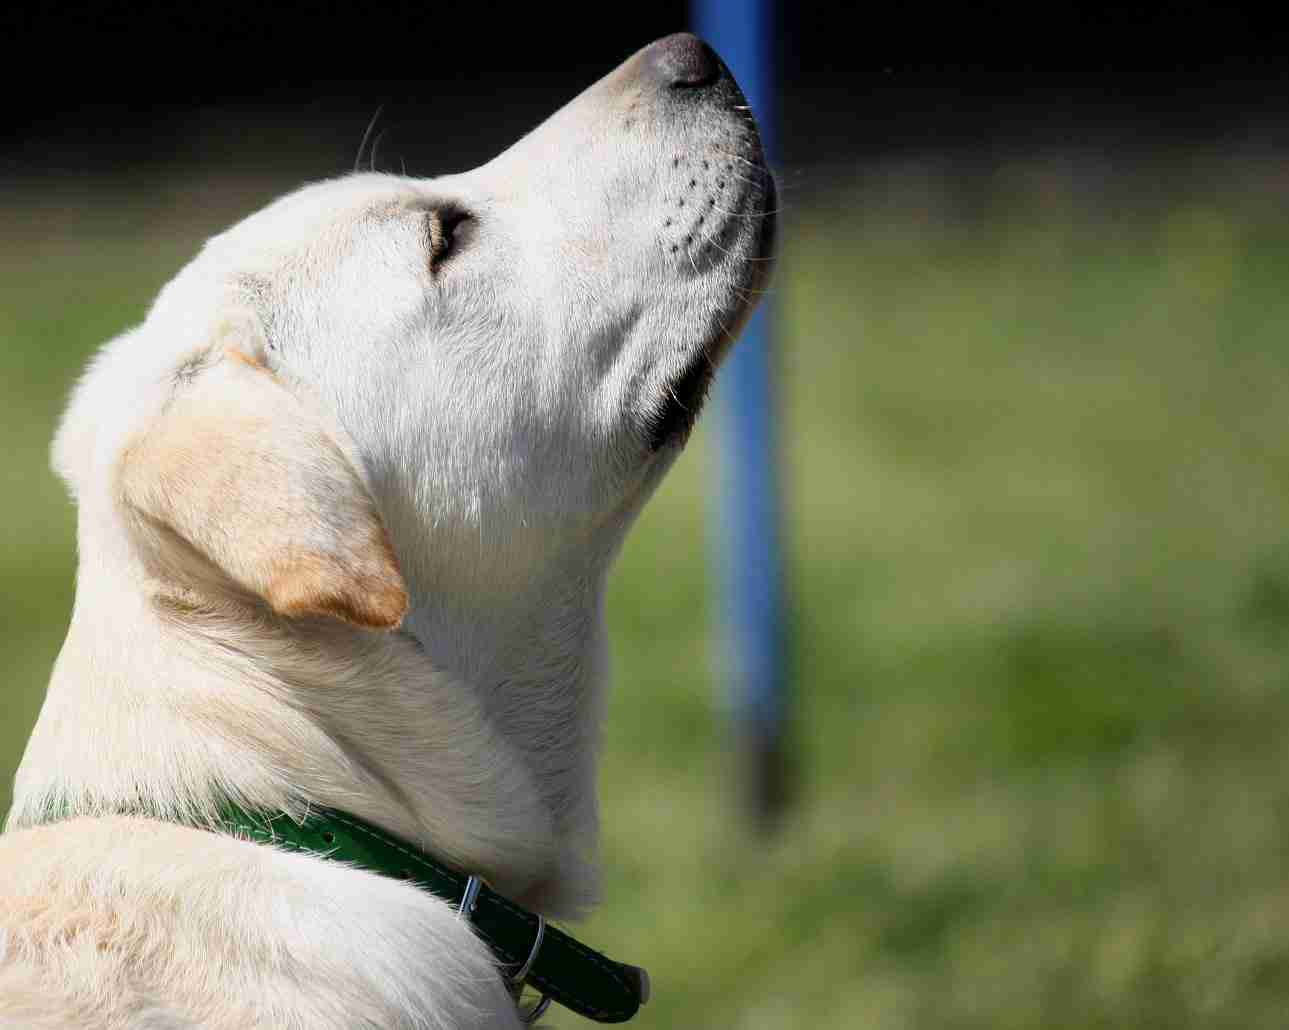 Hond en het baasje: Het gedrag van het dier is ondersteunend